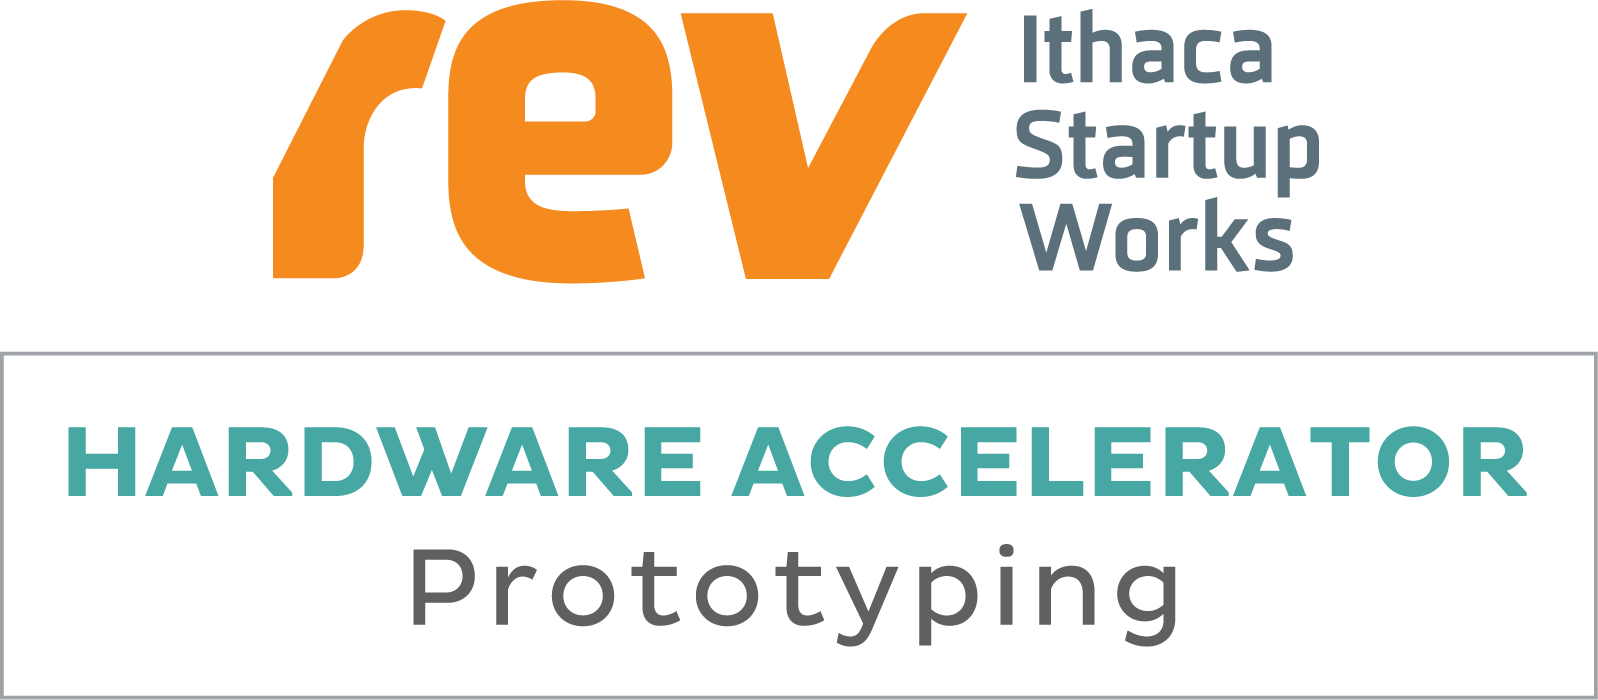 Rev: Ithaca Startup Works Hardware Accelerator Prototyping 